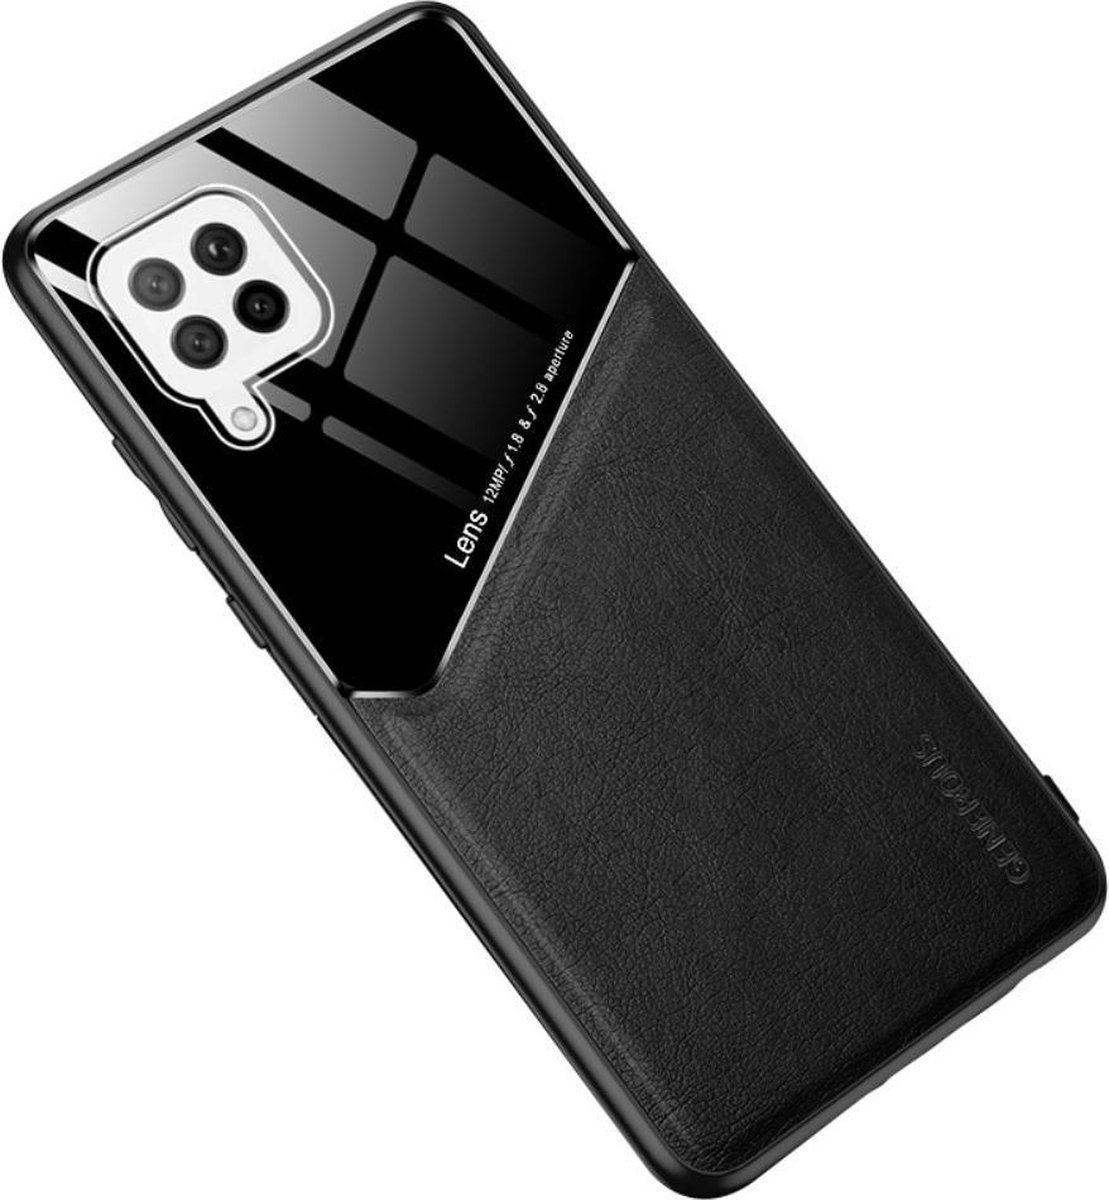 Zwarte hard cover Samsung Galaxy A42 geschikt voor magnetische autohouder